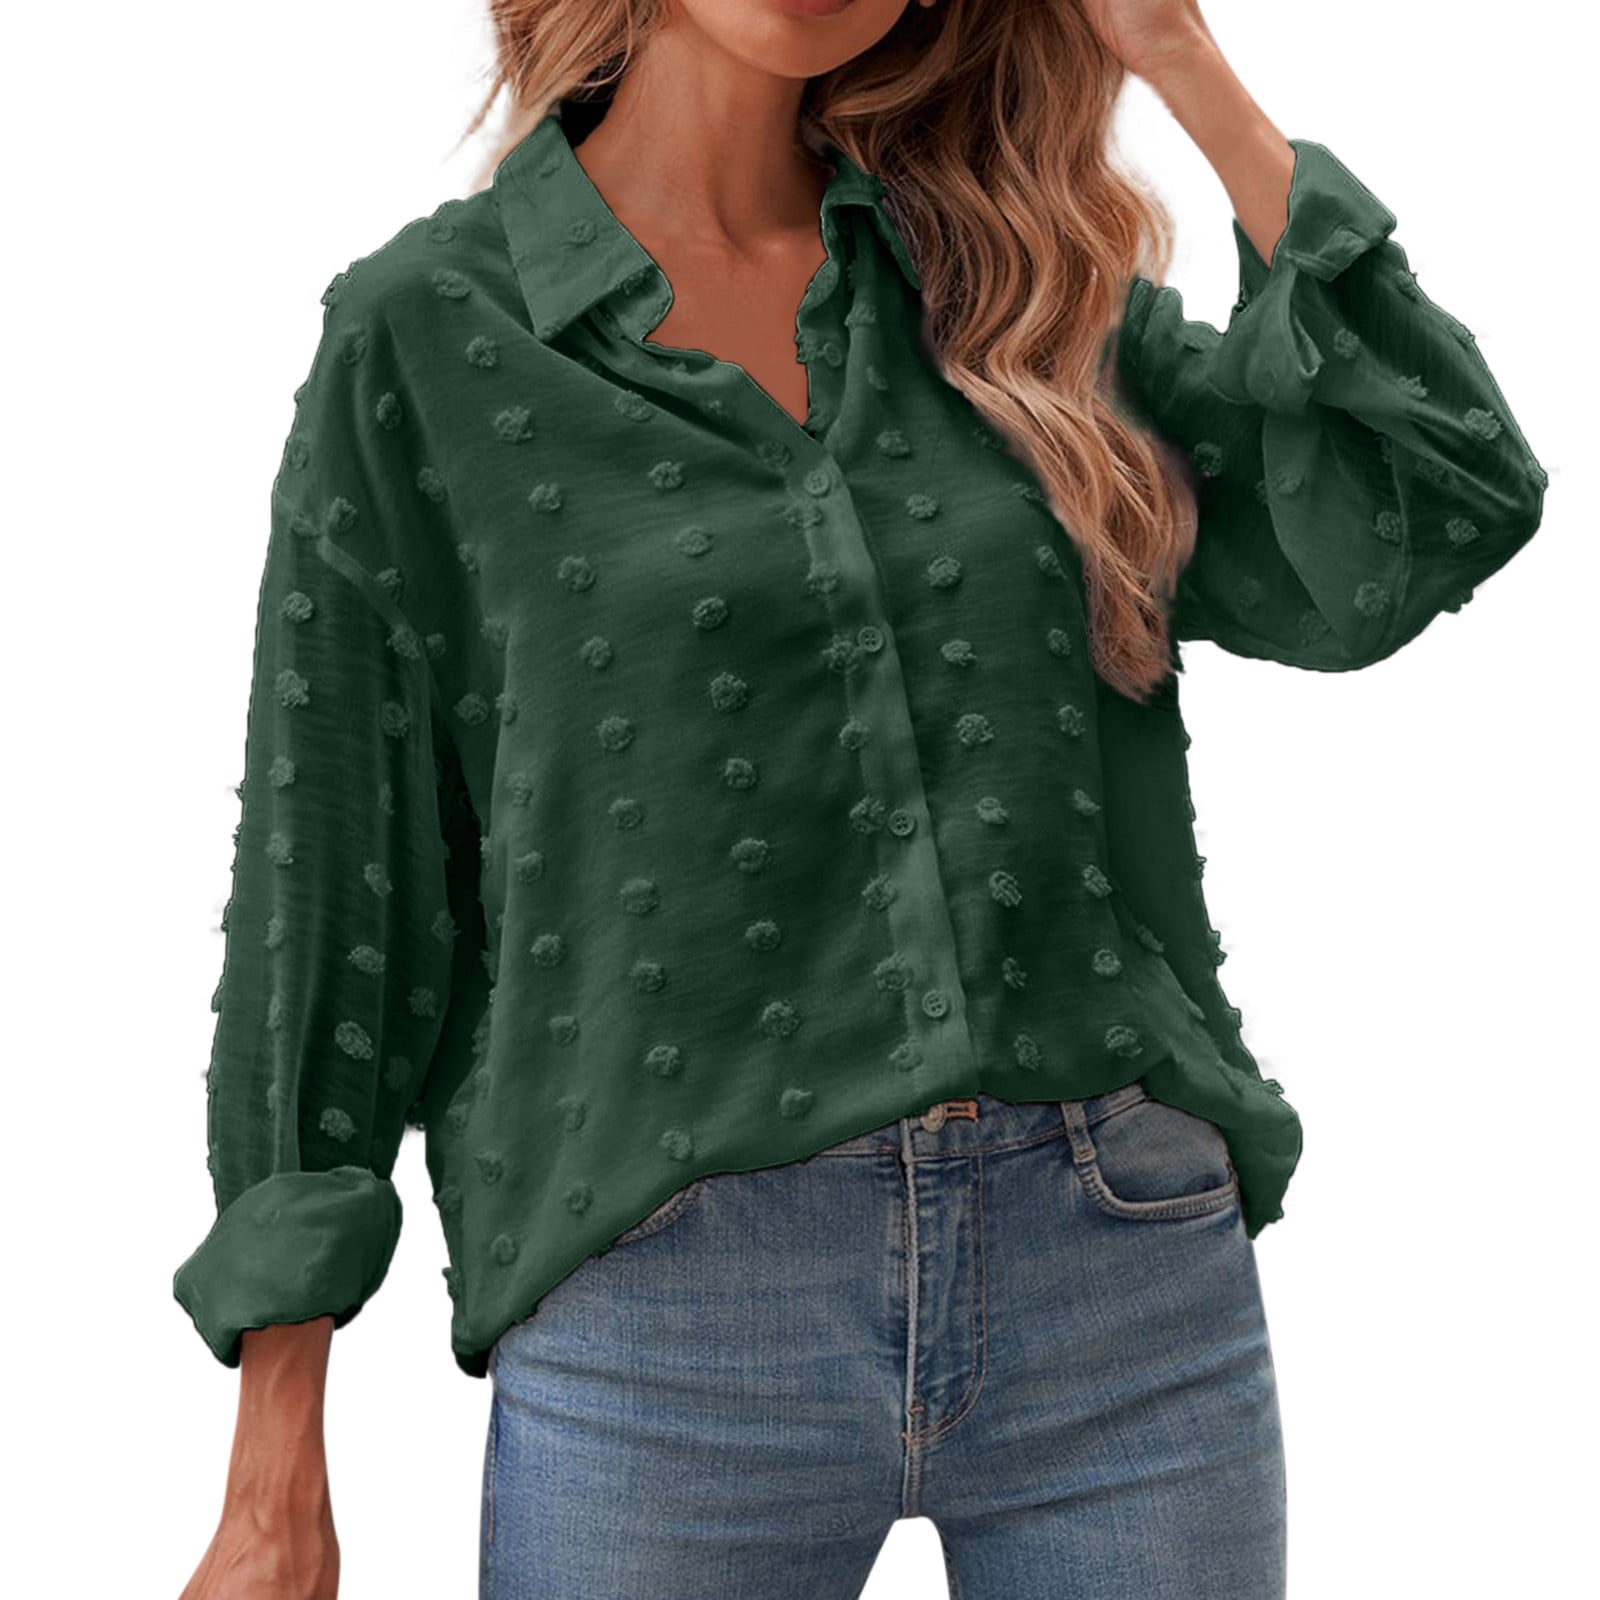 Sngxgn Tshirts Women's Adult Unisex 100% Cotton Classic Fit Polo Shirt  Short Sleeve for Daily Work School Uniform Green Medium 